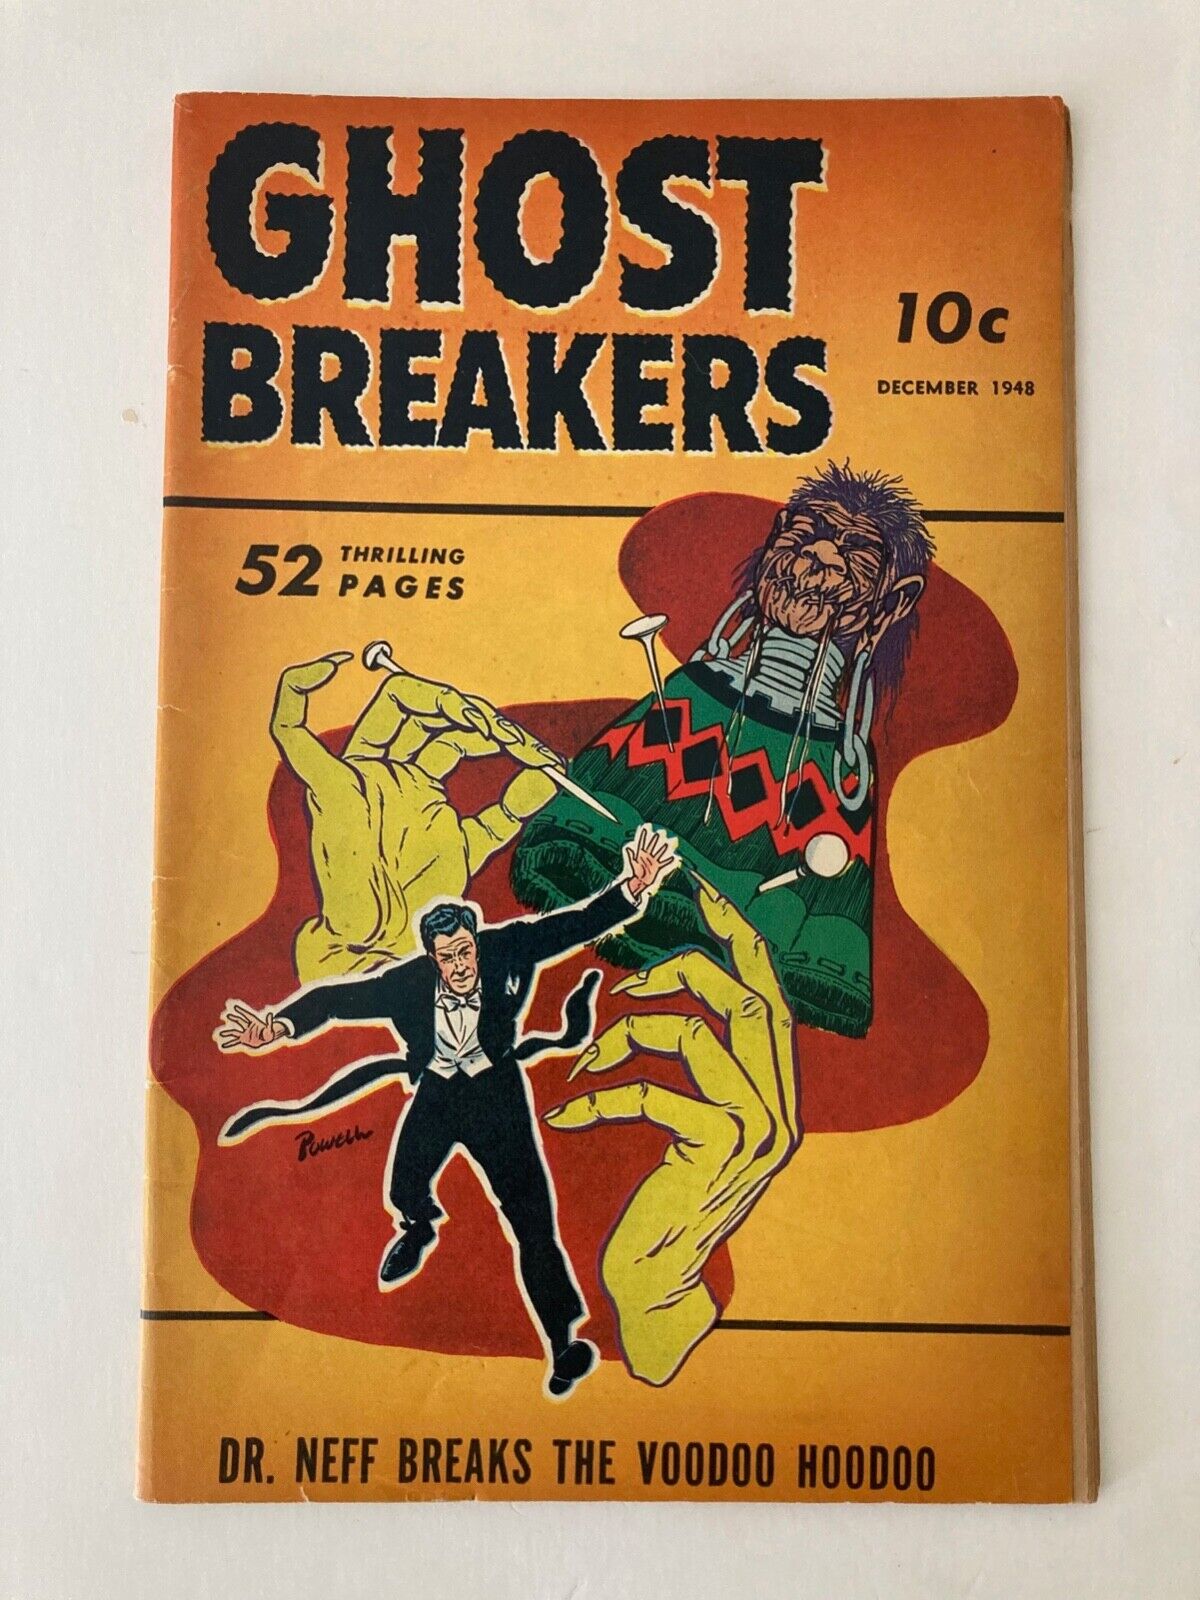 GHOST BREAKERS #2 - Street & Smith - Dr. Neff - Shrunken head cover - Golden Age